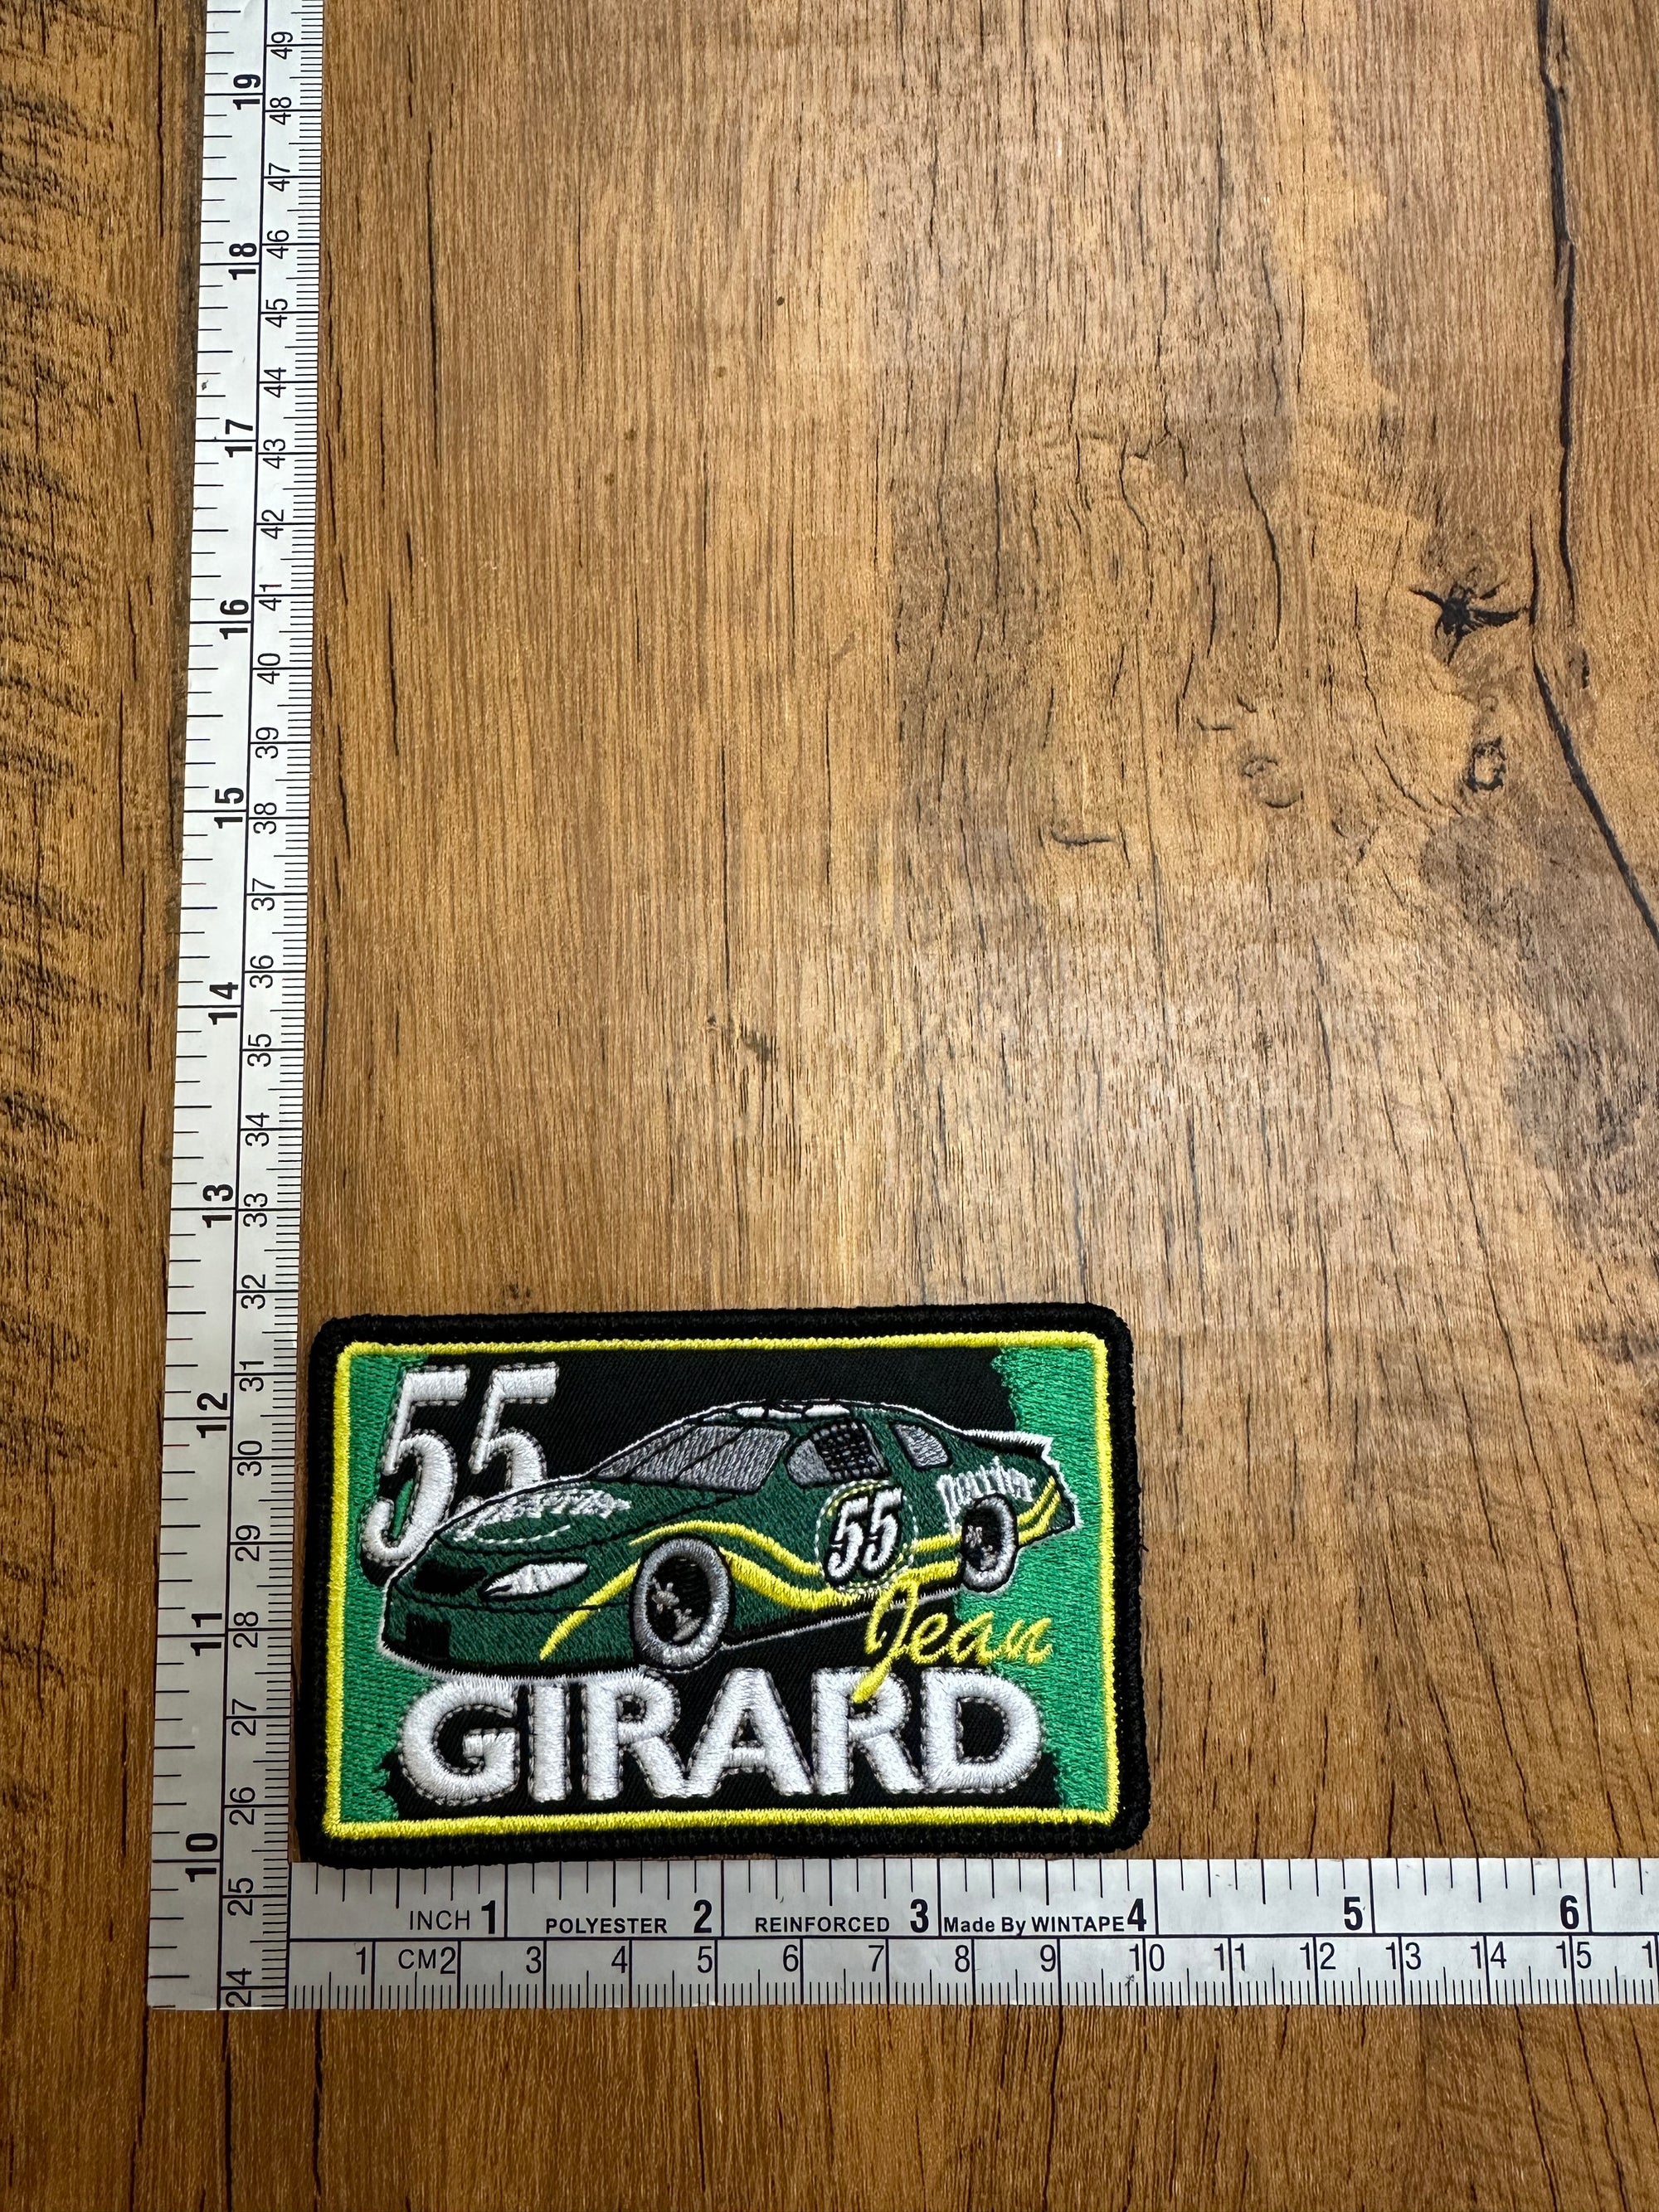 55 Team Girard